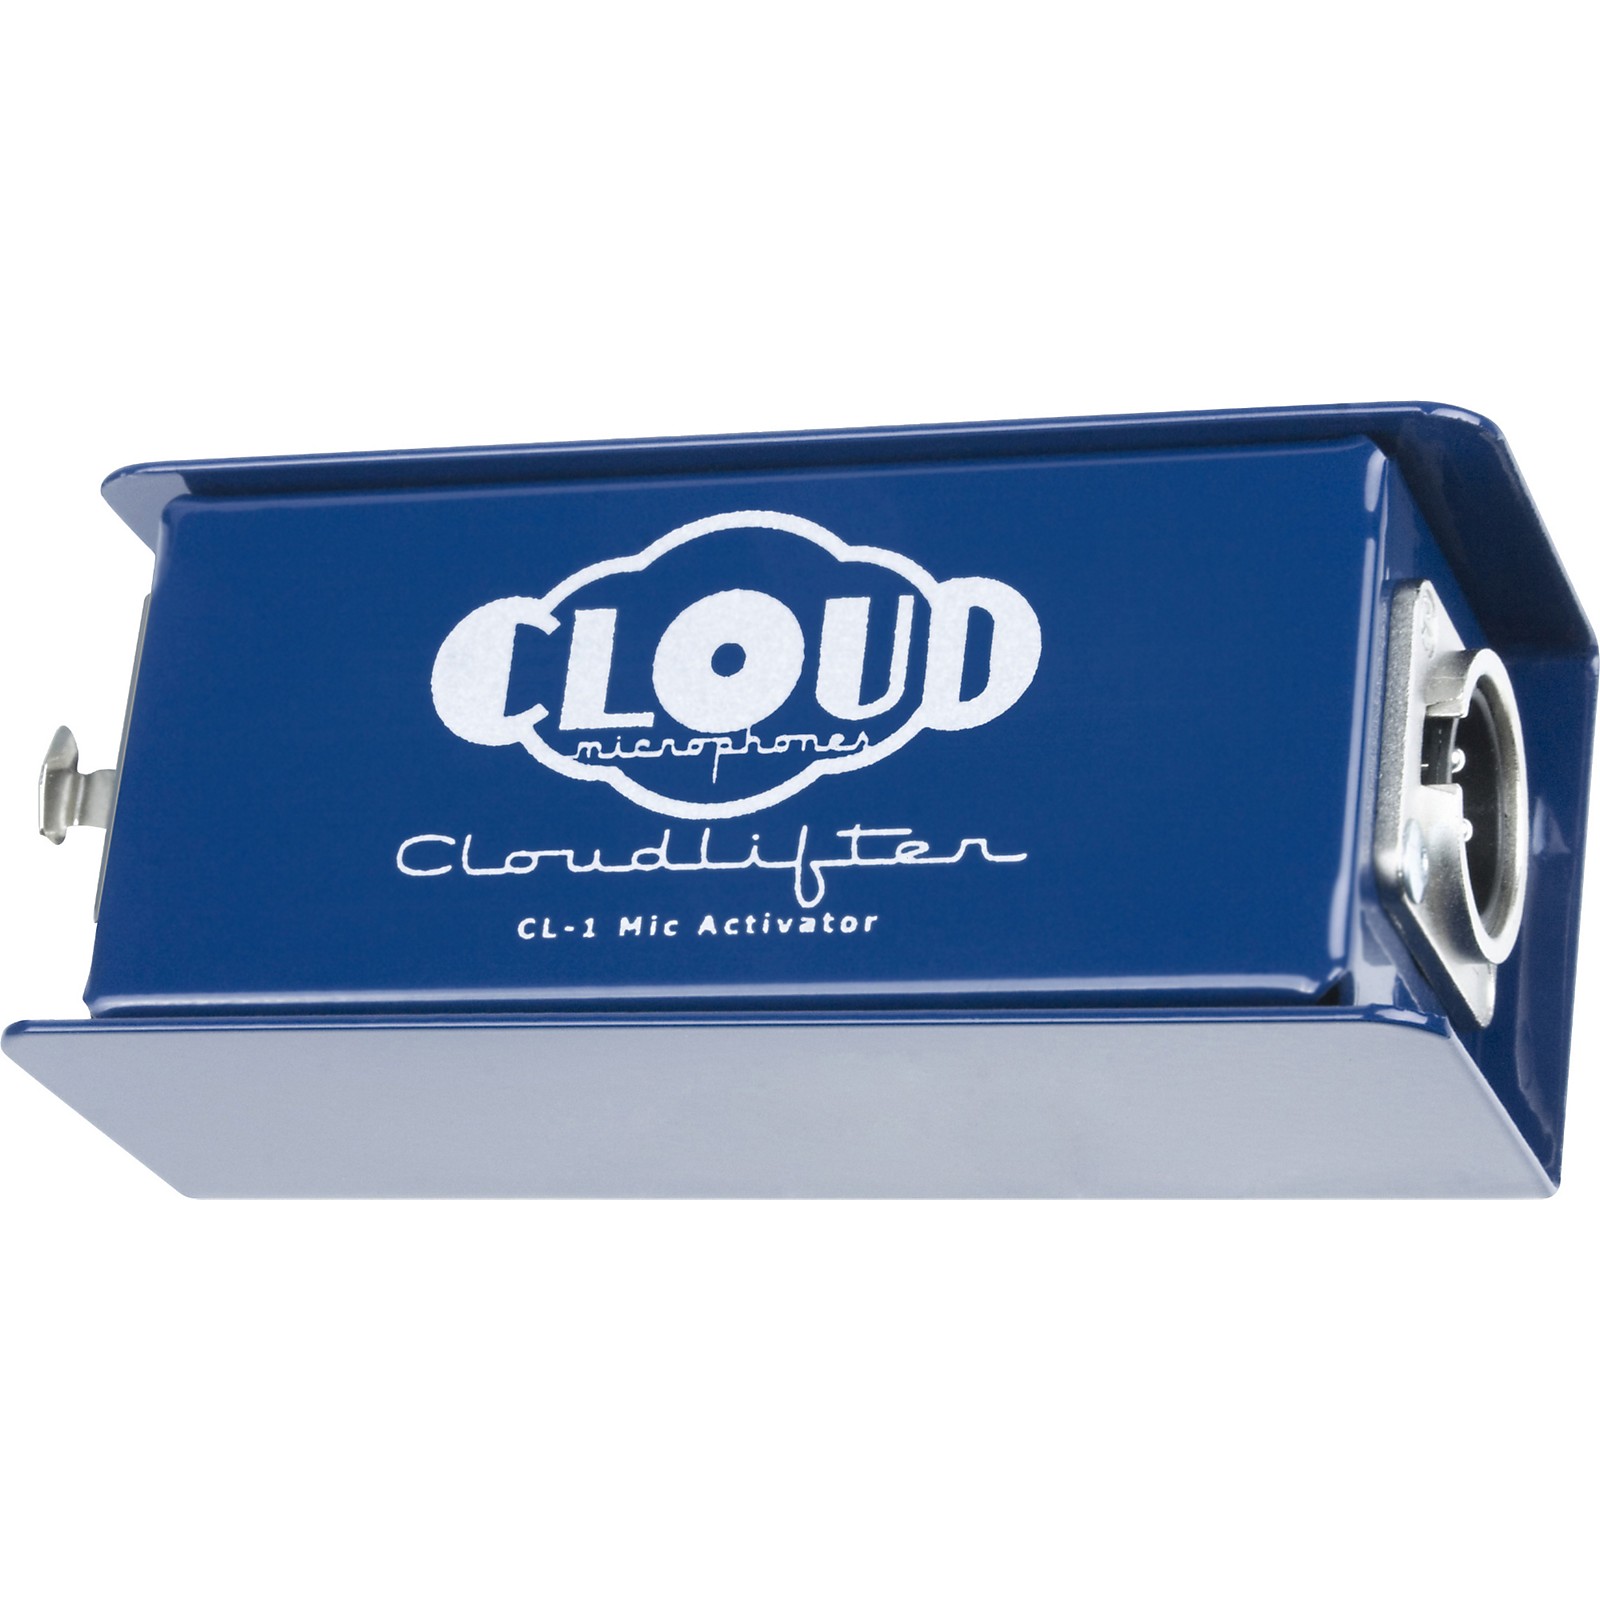 Cloud Cloudlifter CL-1 Mic Activator